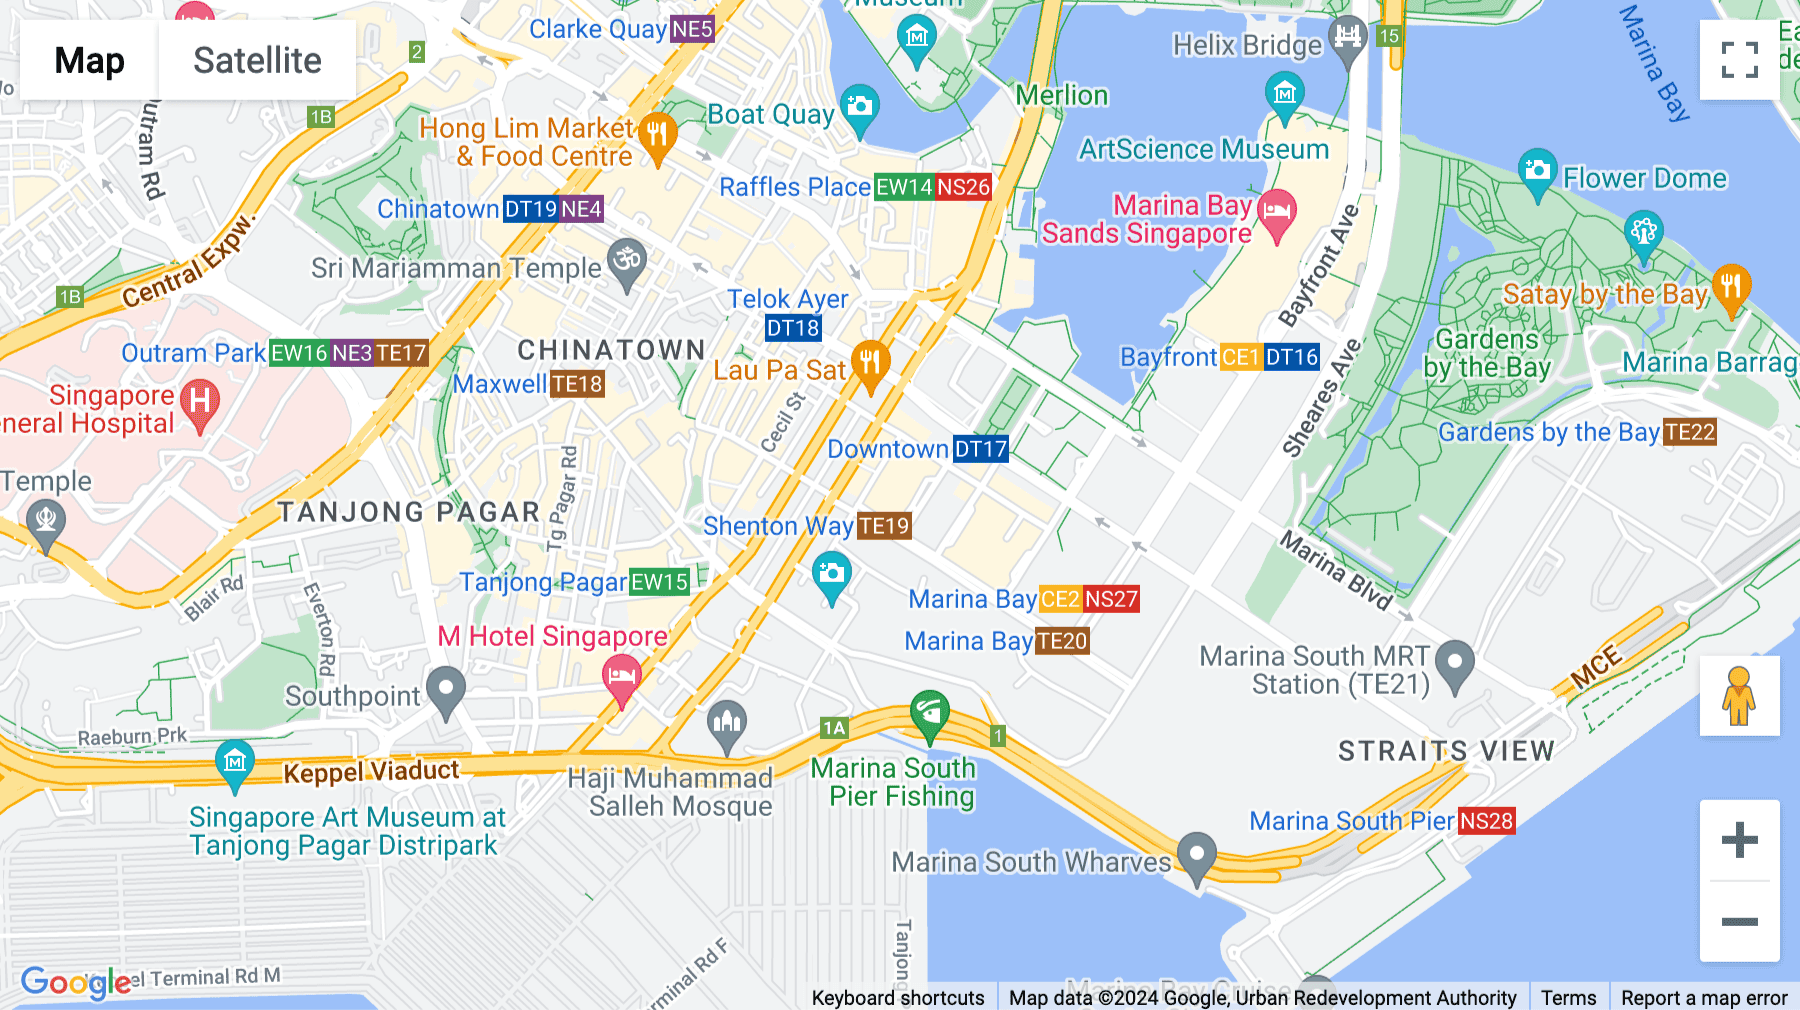 Click for interative map of Asia Square Tower 2, 12 Marina View, Marina Bay, Singapore